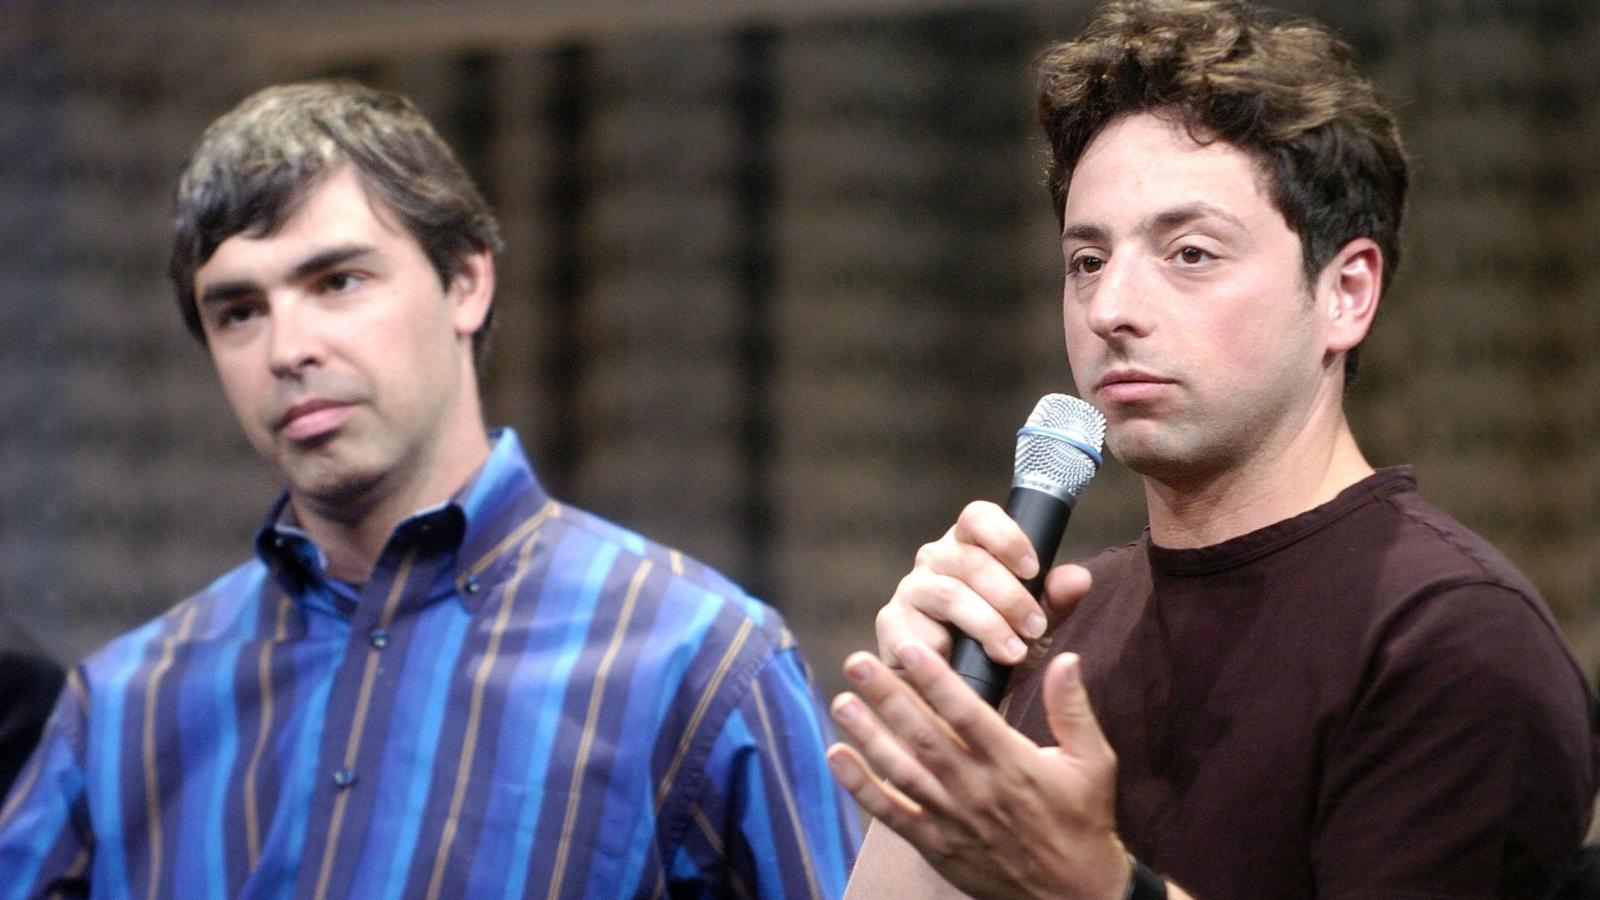 Sergey Brin started Google with strange ideas about female